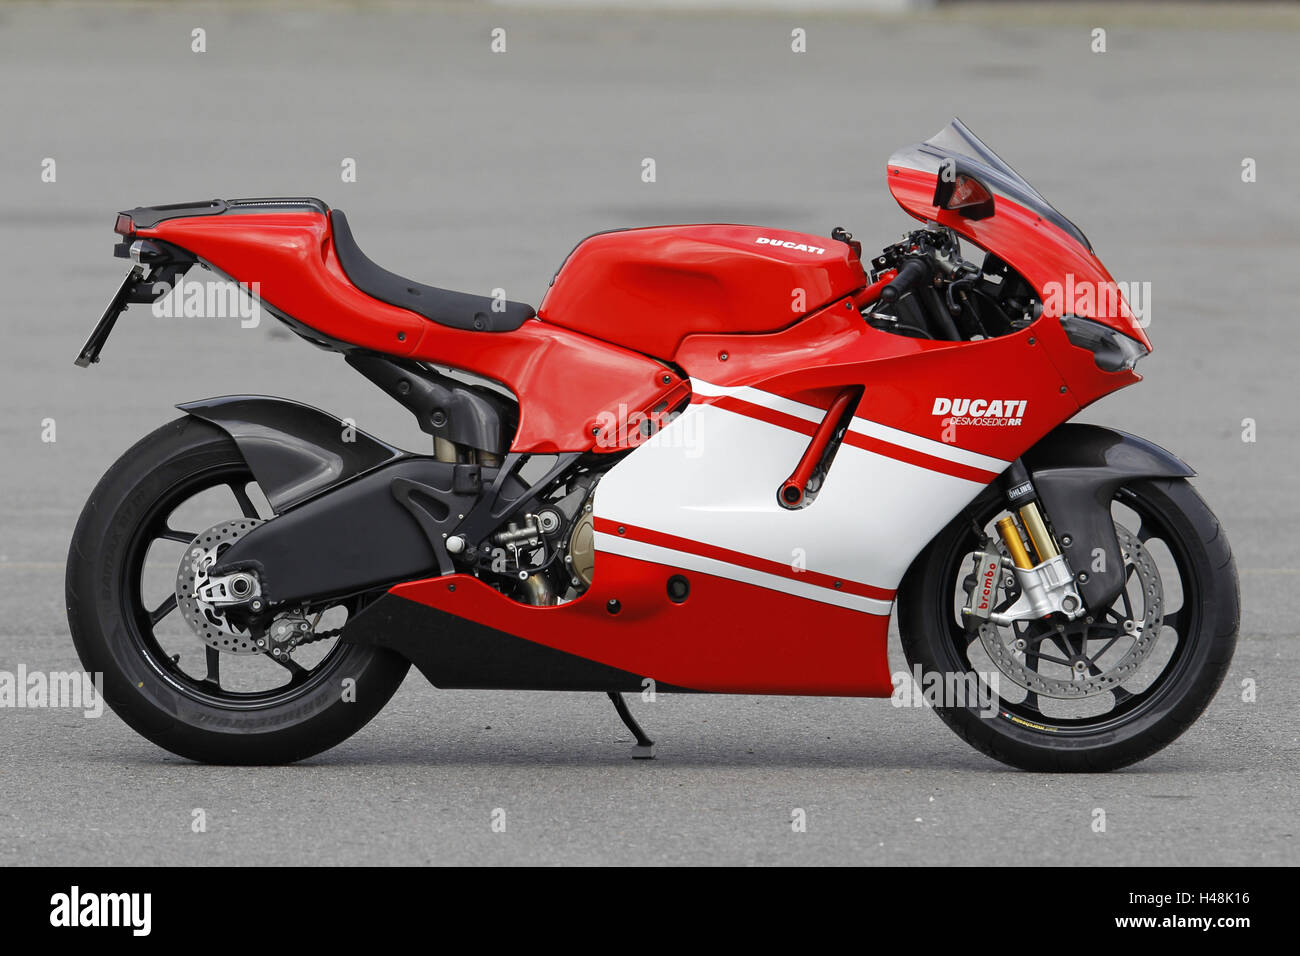 Motorcycle, Ducati Desmosedici RR, red, precious, Italian, Stock Photo